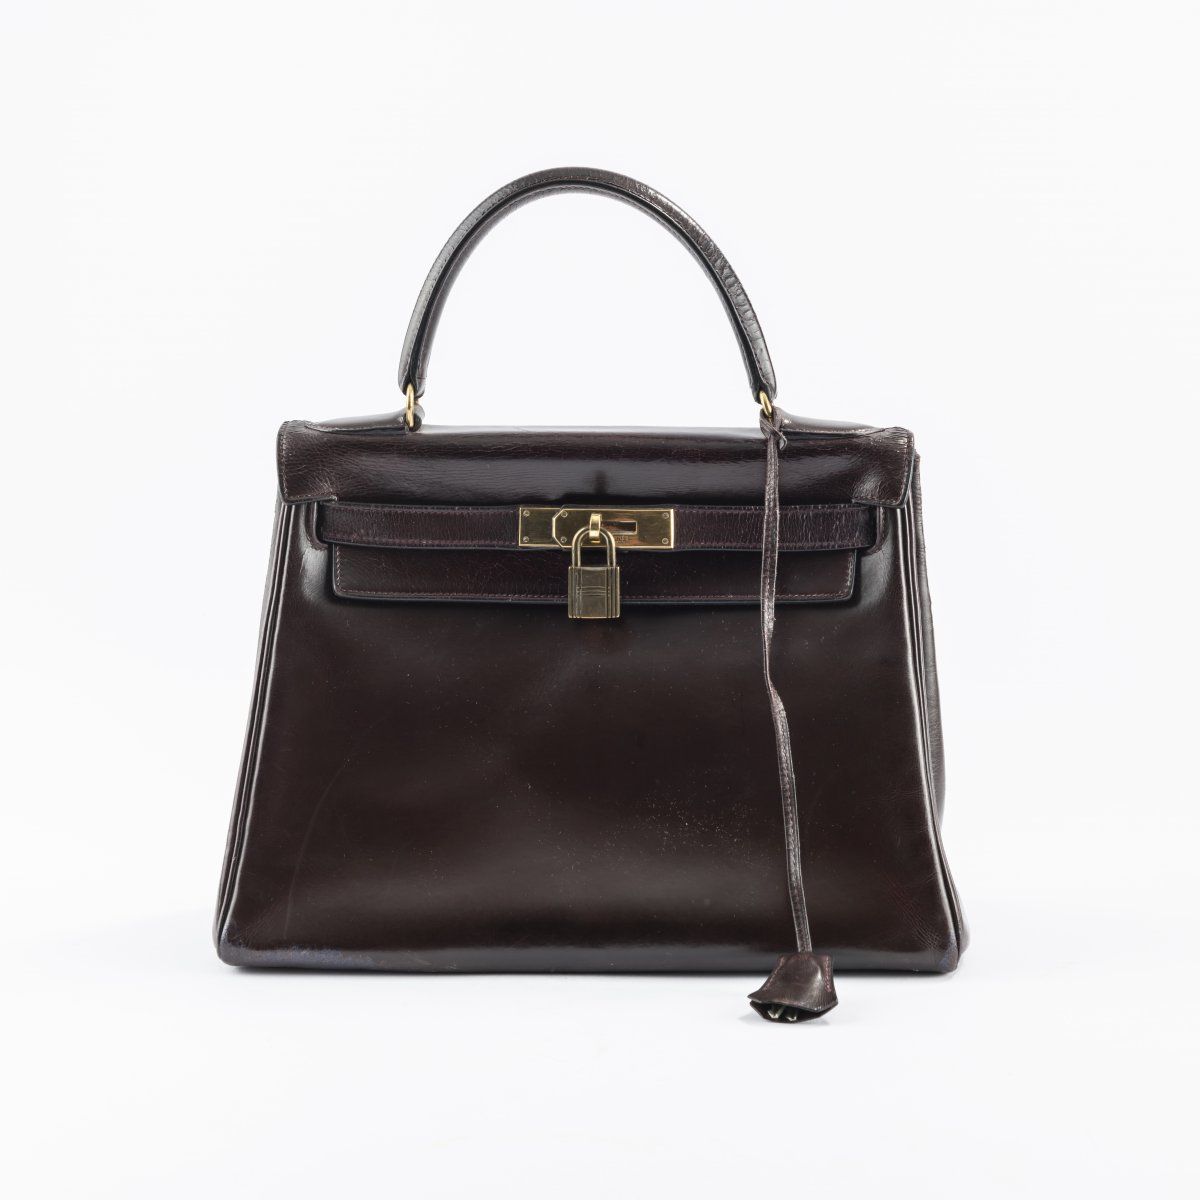 Hermès, Paris 爱马仕，巴黎，"Kelly Bag 28 "手提包，1955/56，红棕色皮革，Retourné形状，皮革衬里，金色硬件。

H.2&hellip;